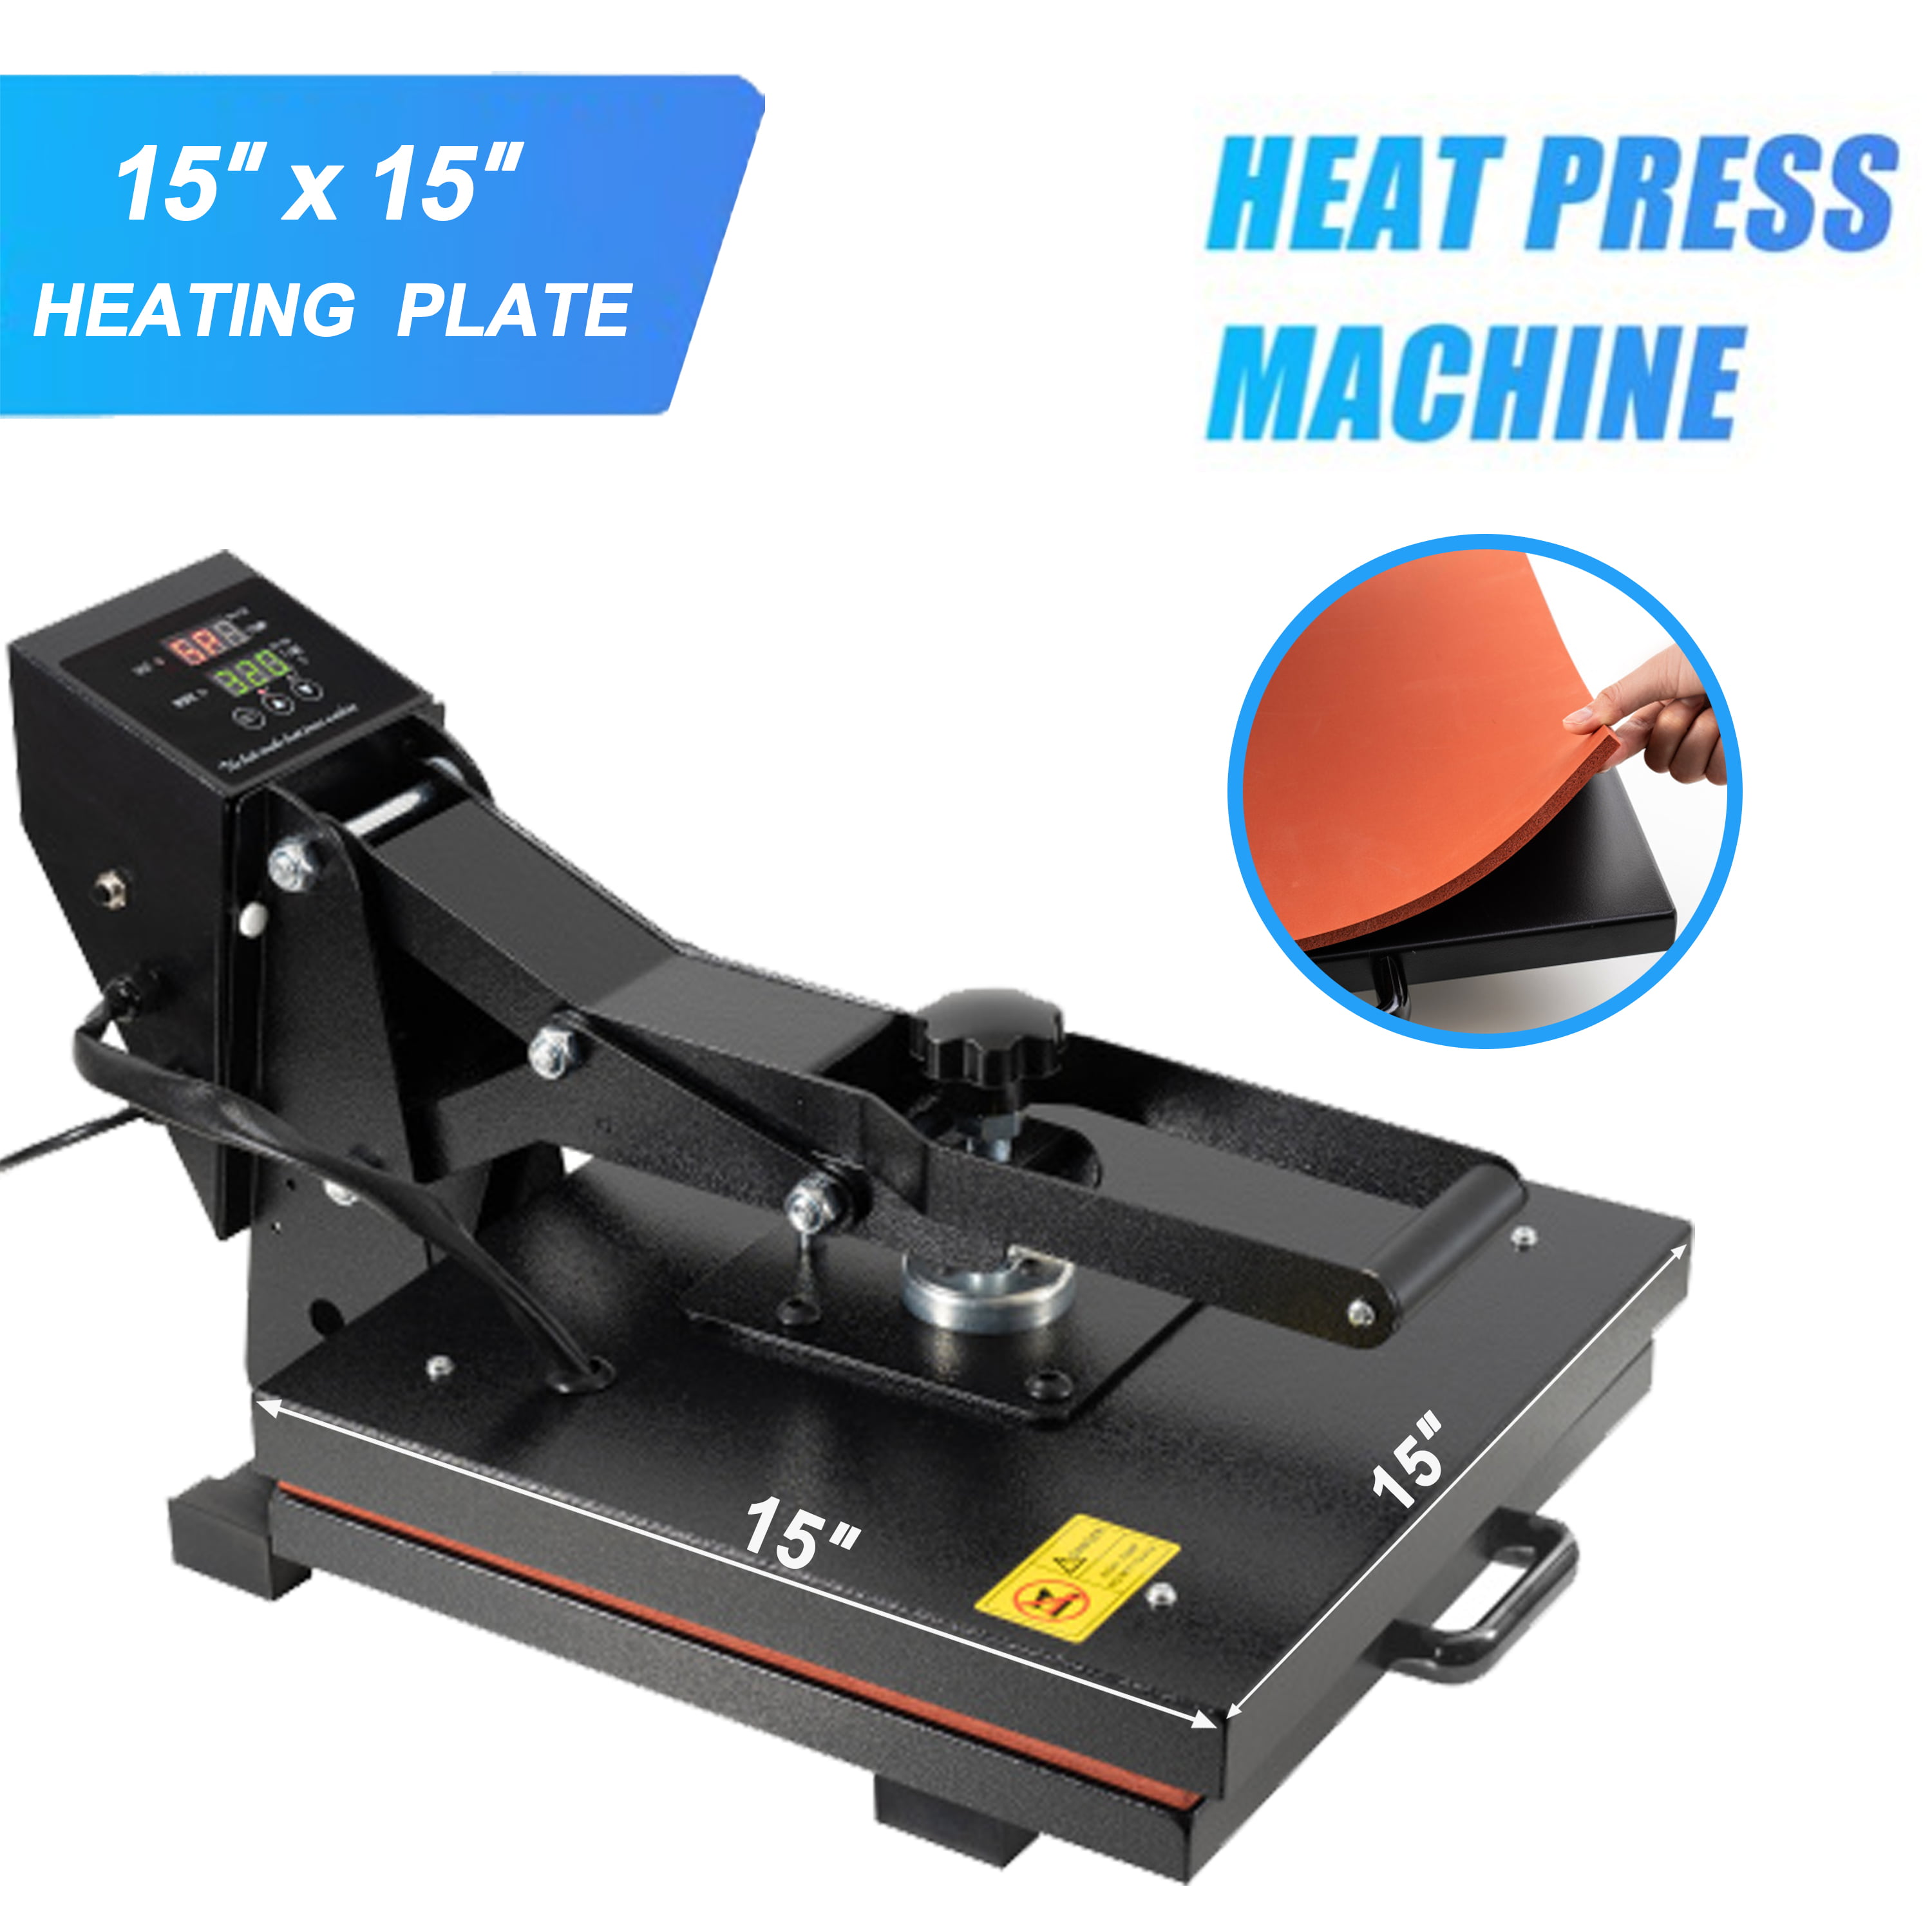 11.8*9 inches, Heat Press Machine for DIY T Shirts, T Shirt Press